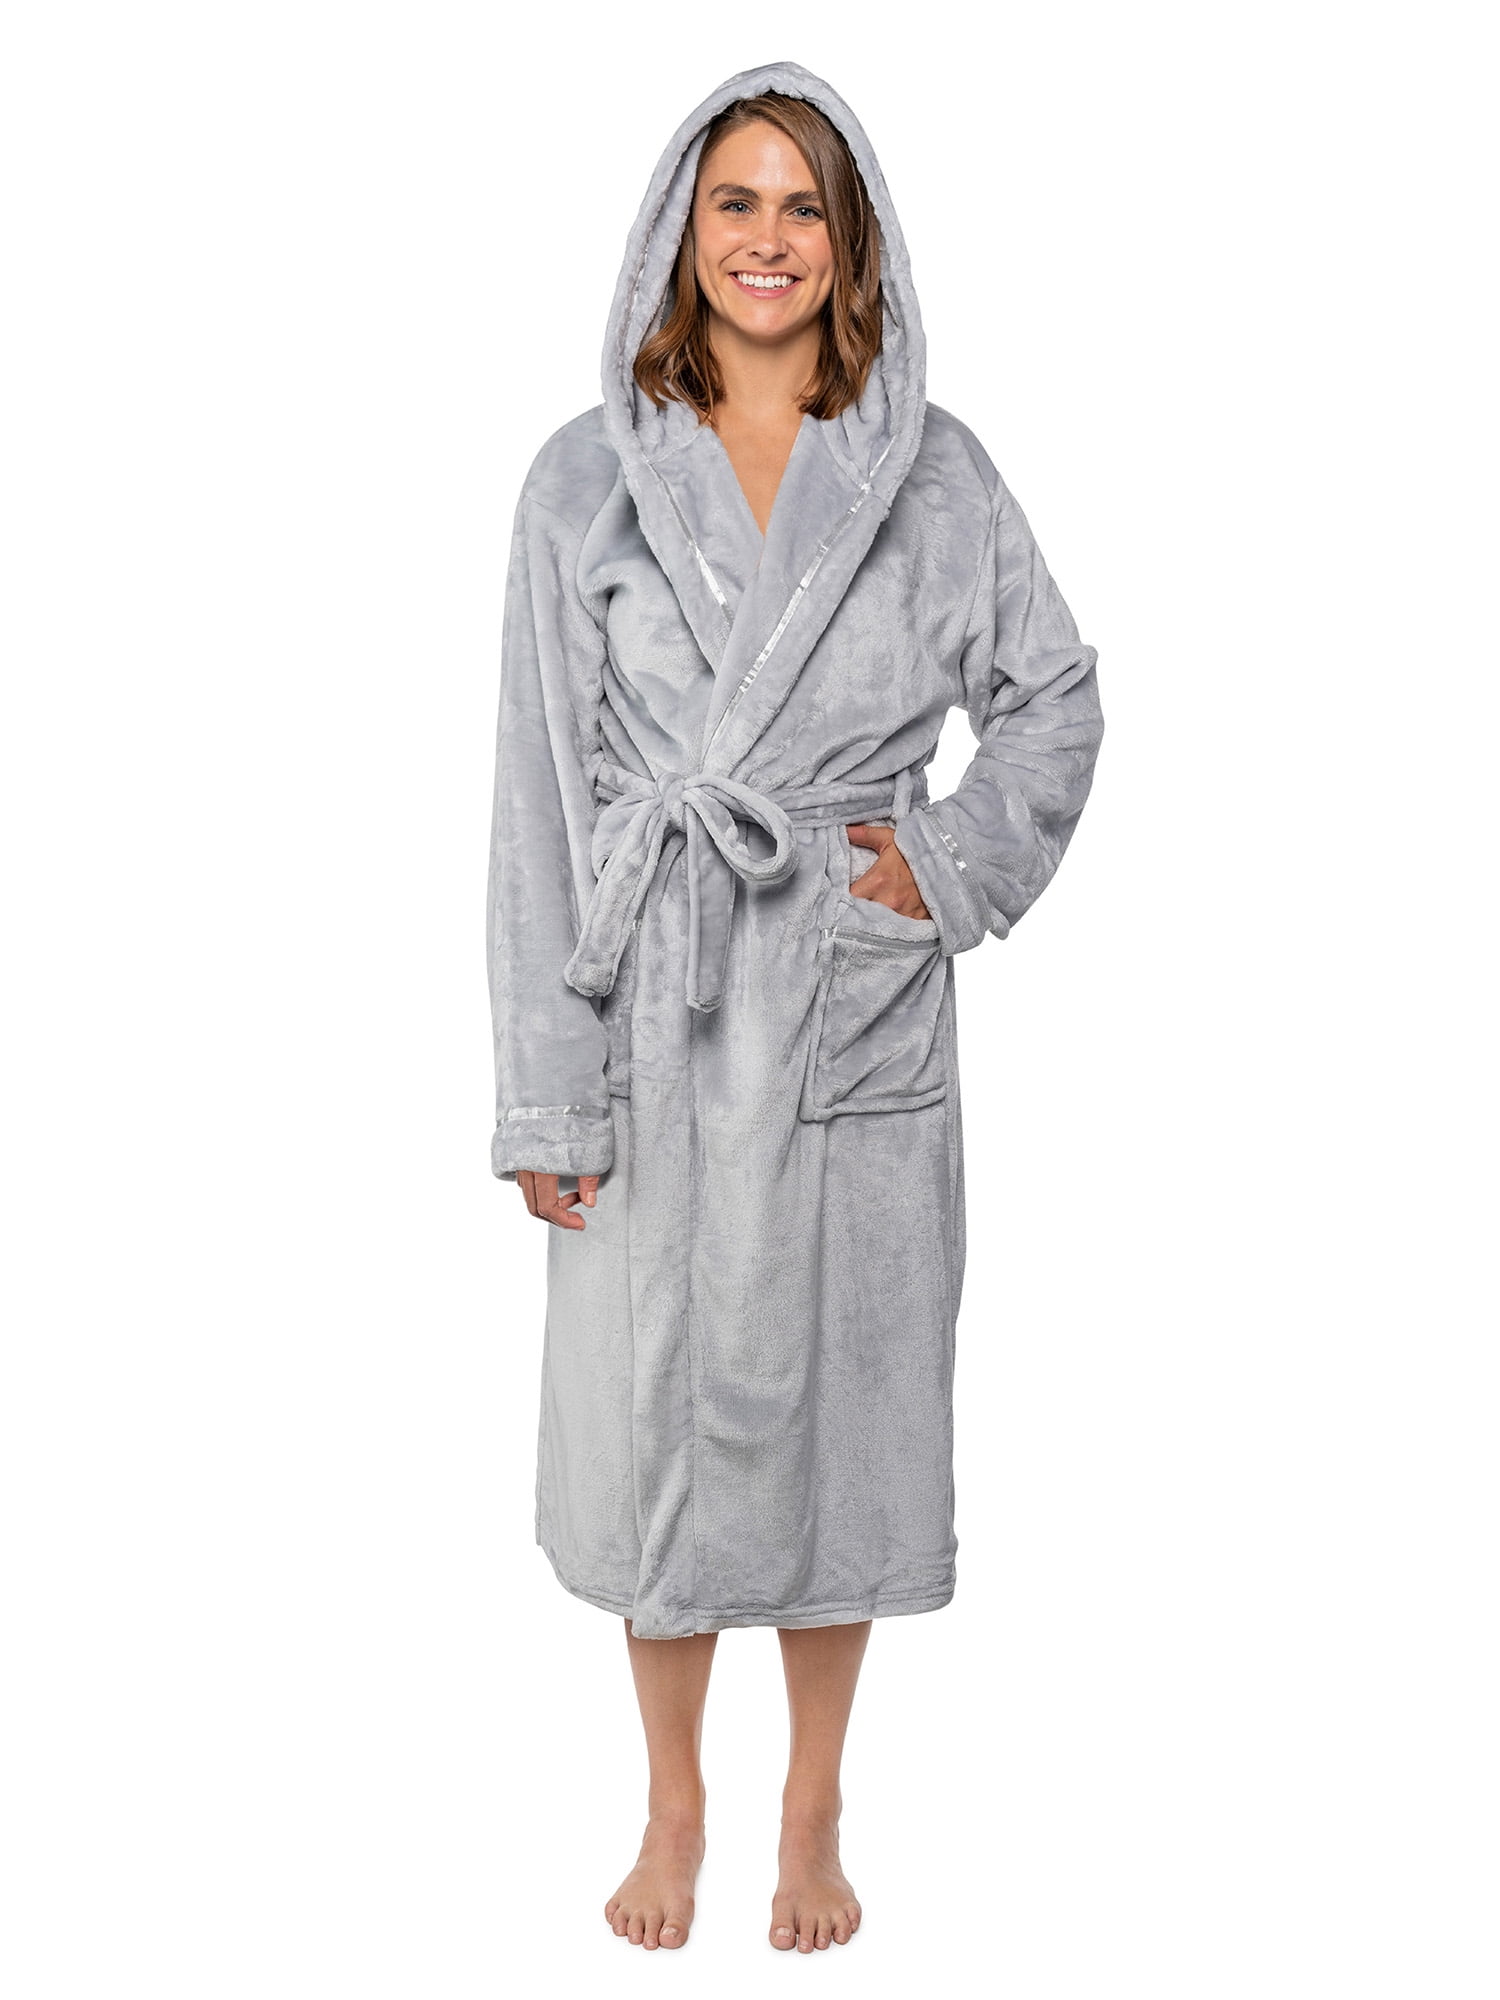 Details about   2020 Morning robe plus size silk women's pajamas European and American bathrobes 